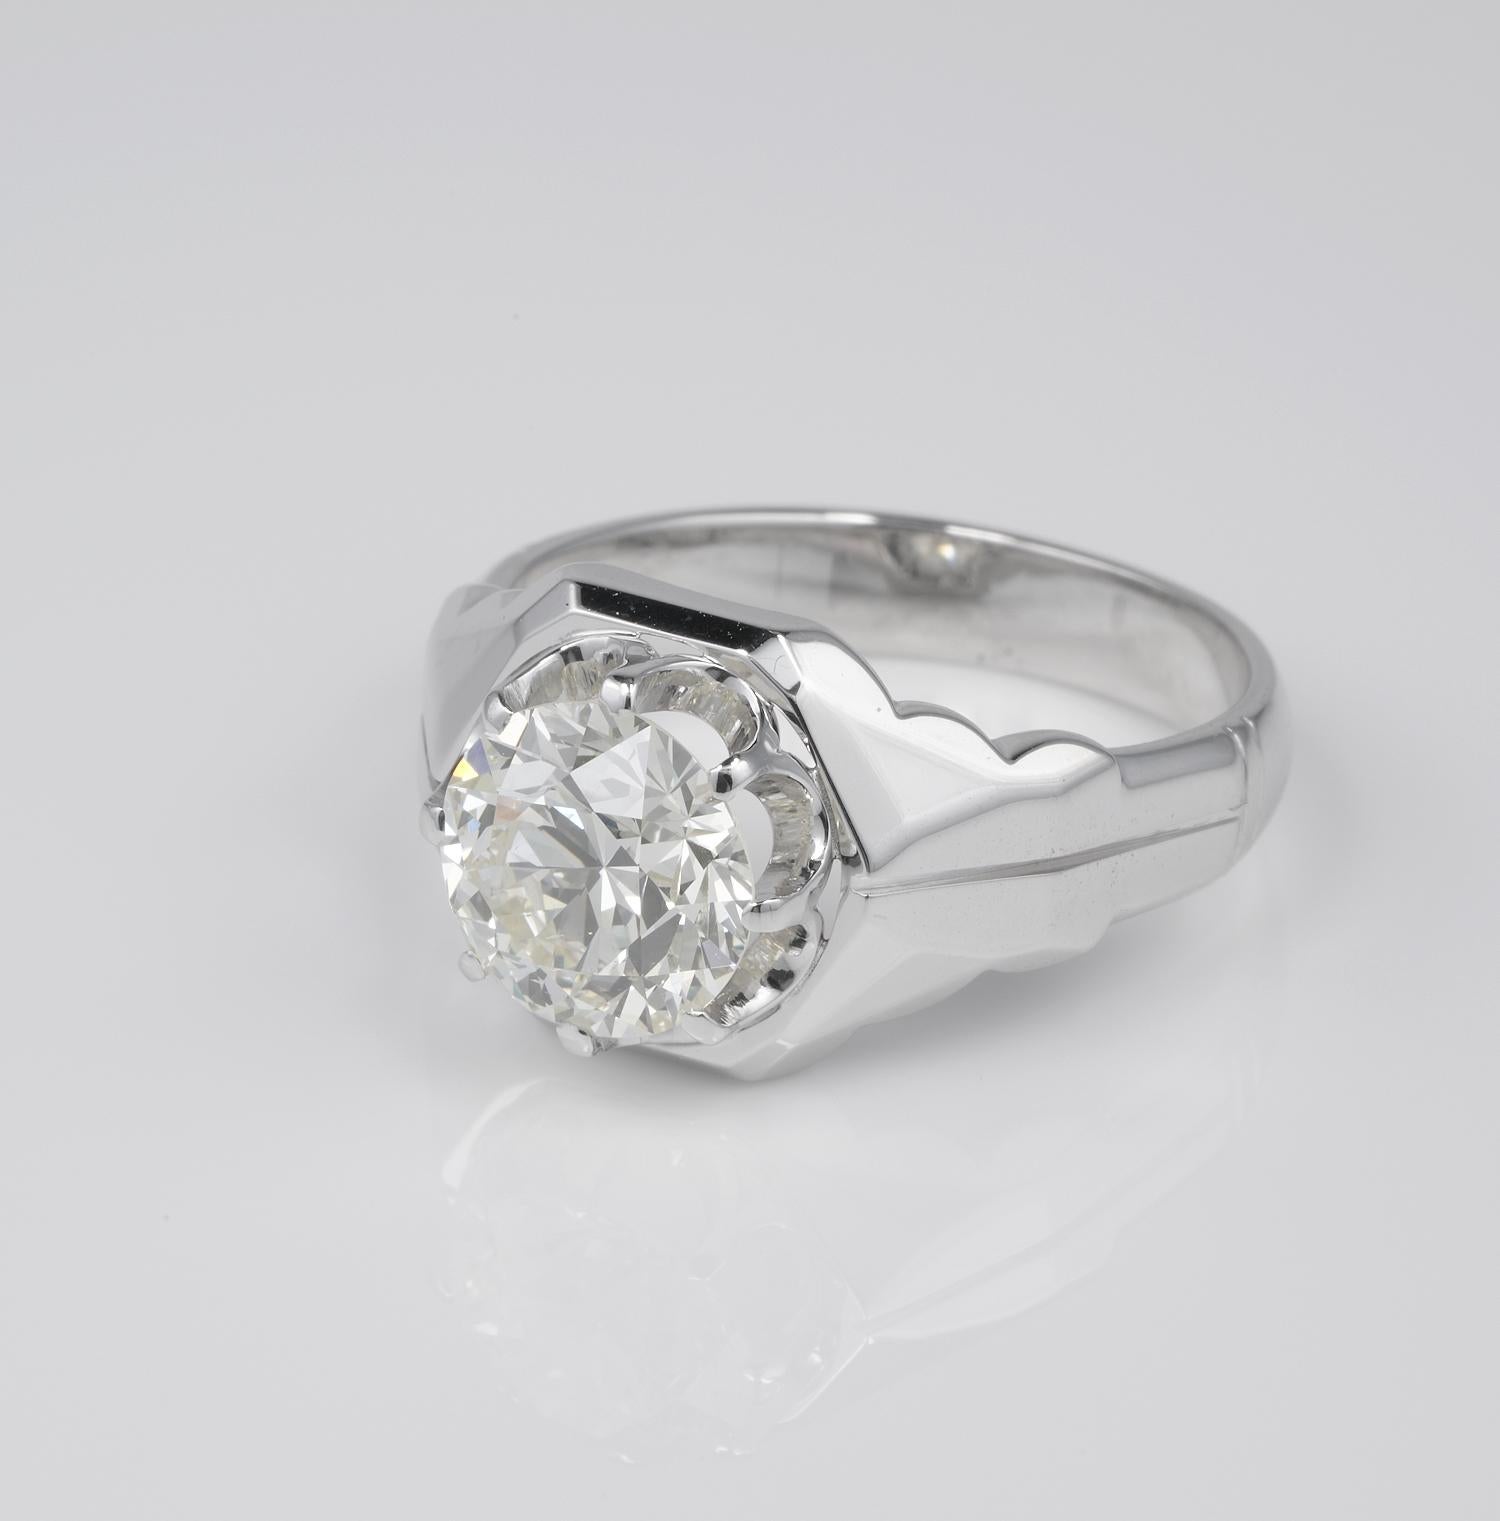 Magnificent 3.10 Carat Old Brilliant Cut Diamond Solitaire Unisex Rare Ring In Excellent Condition For Sale In Napoli, IT